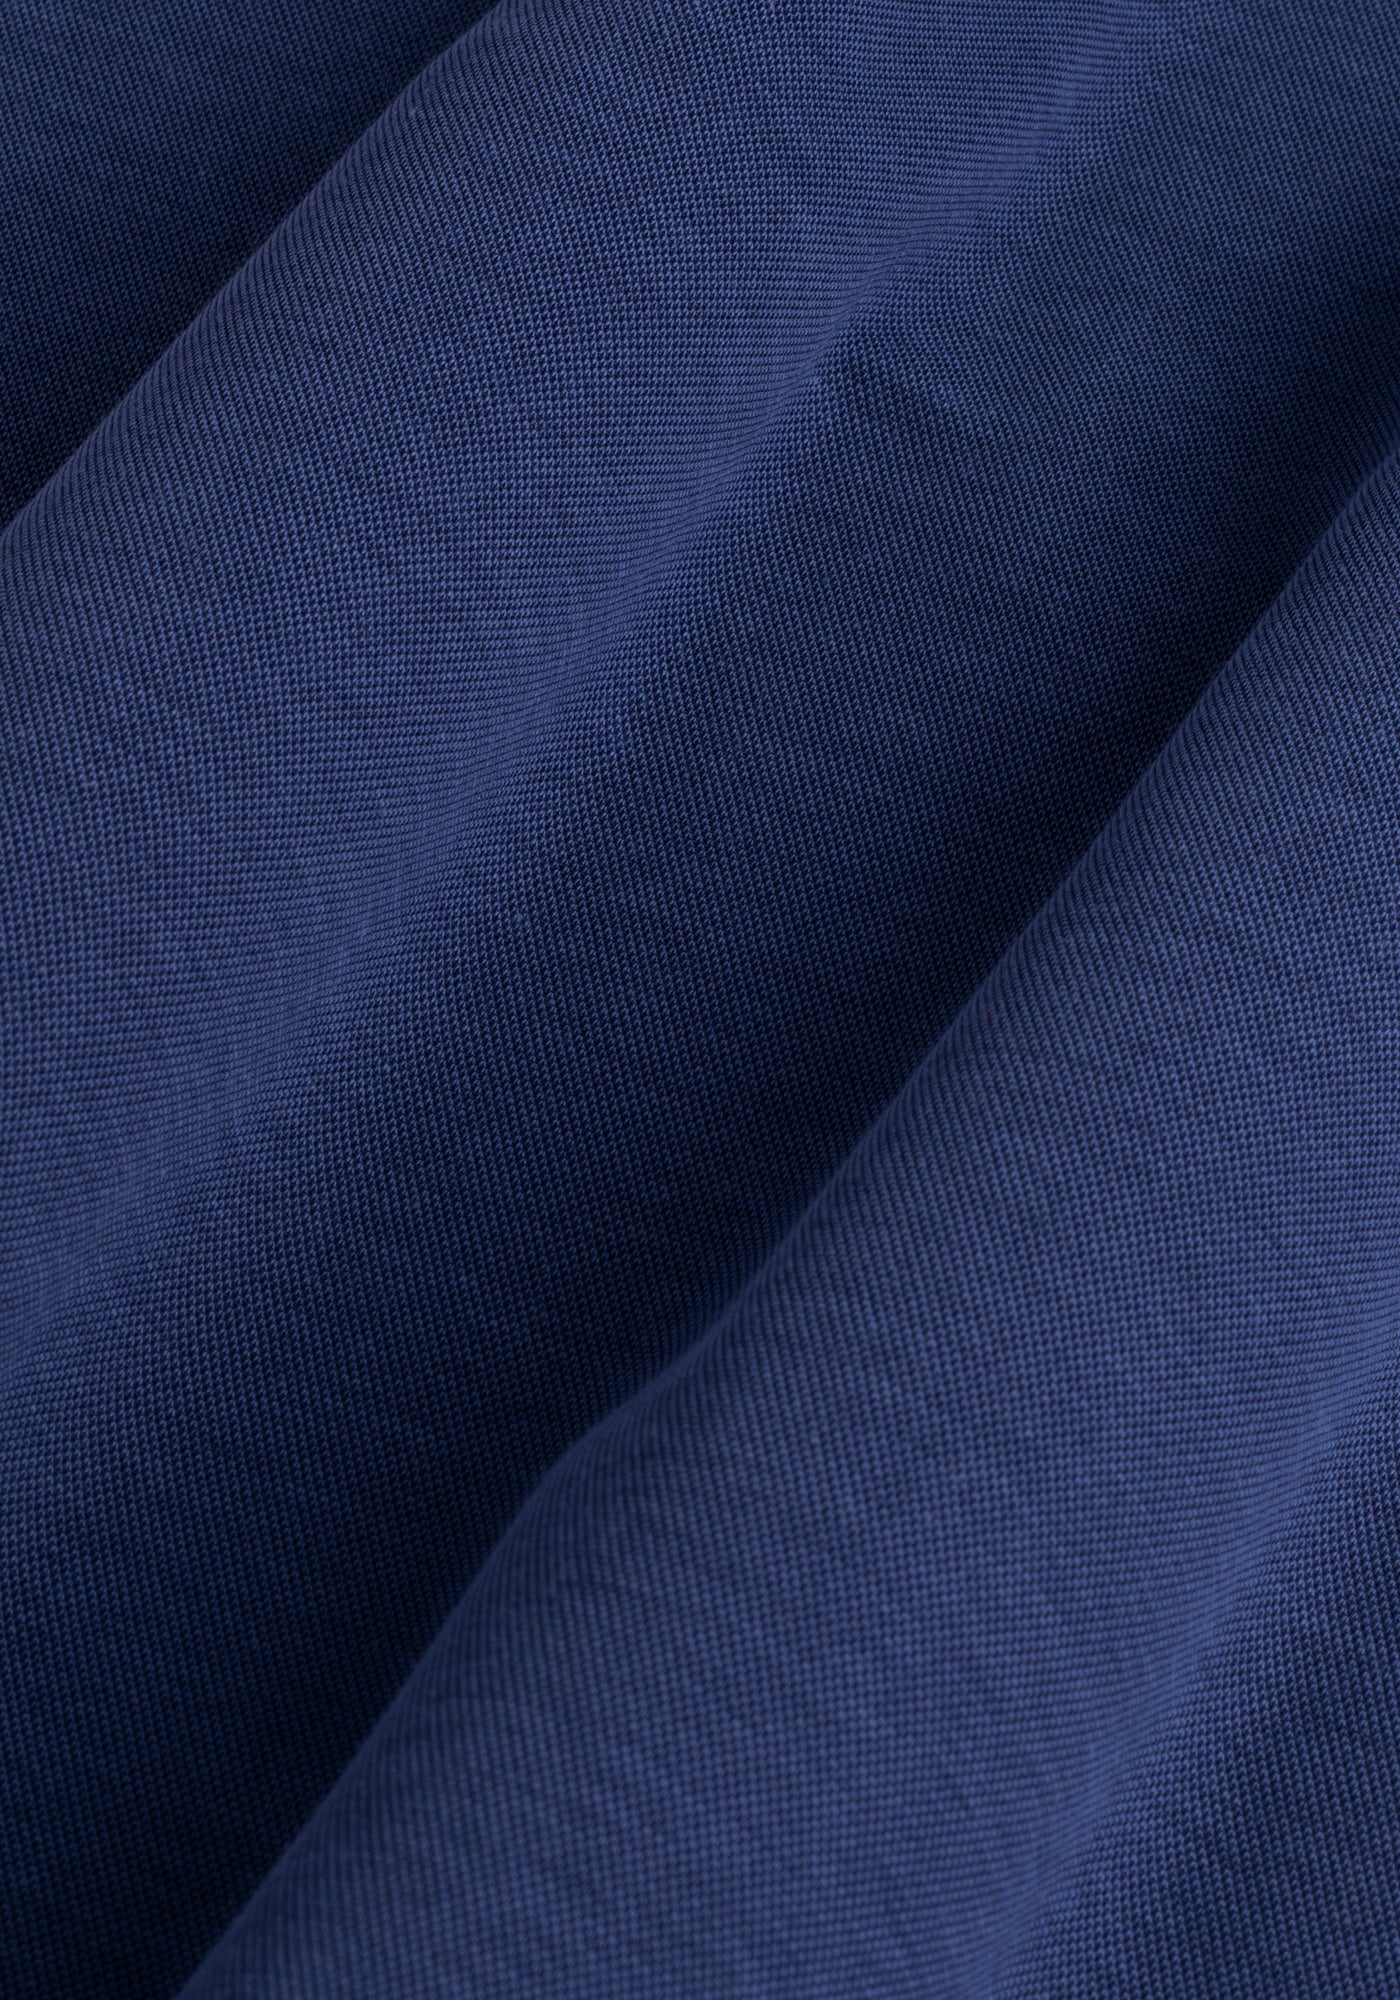 Delft Blue Soft Cotton Polo Shirt